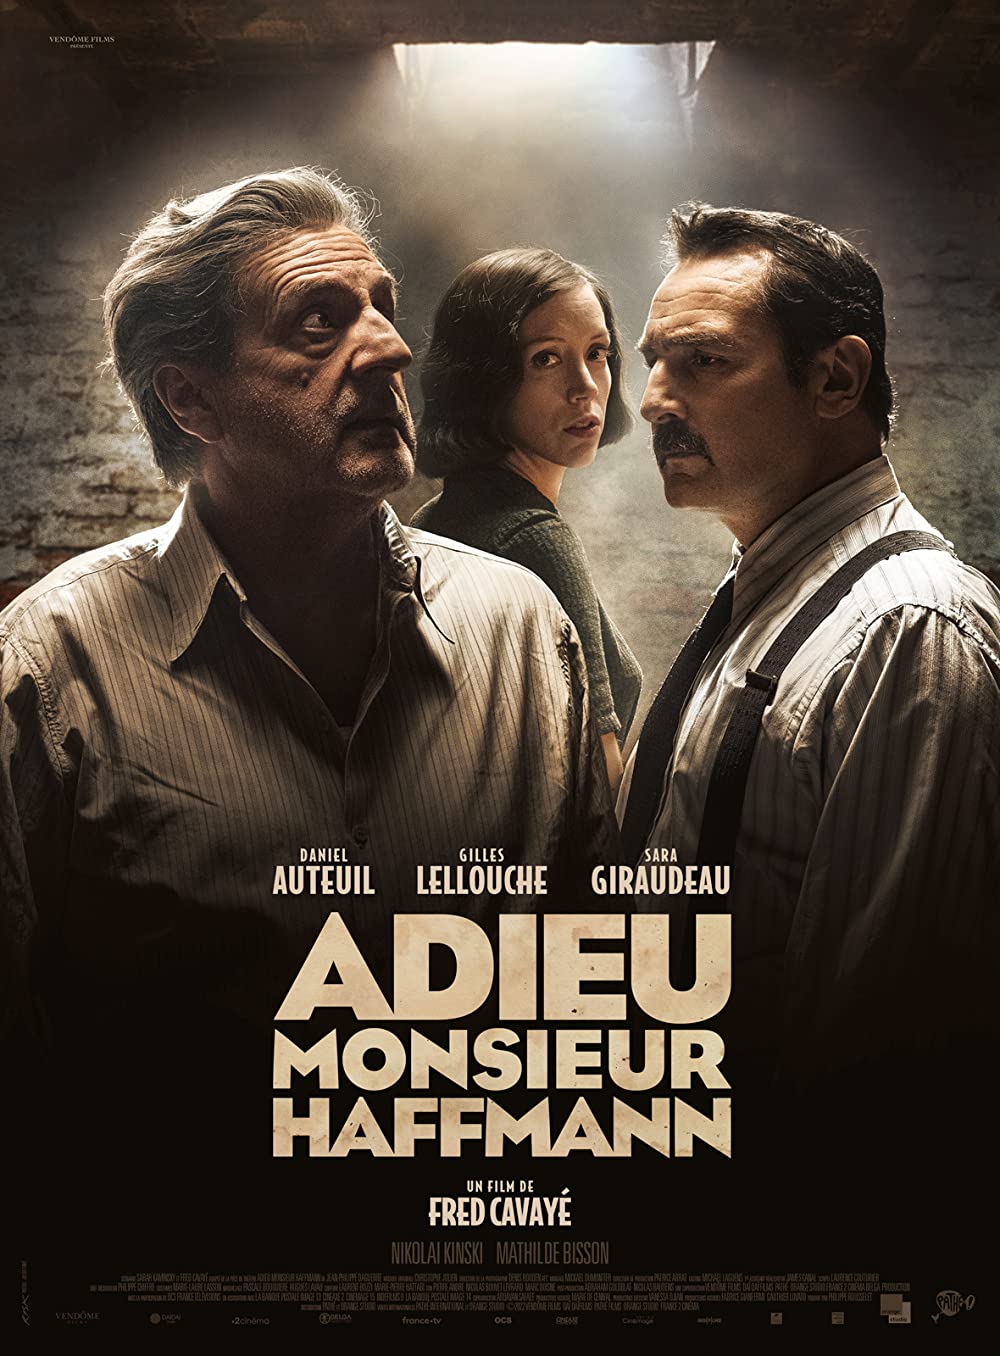 Filmbeschreibung zu Adieu Monsieur Haffmann (OV)